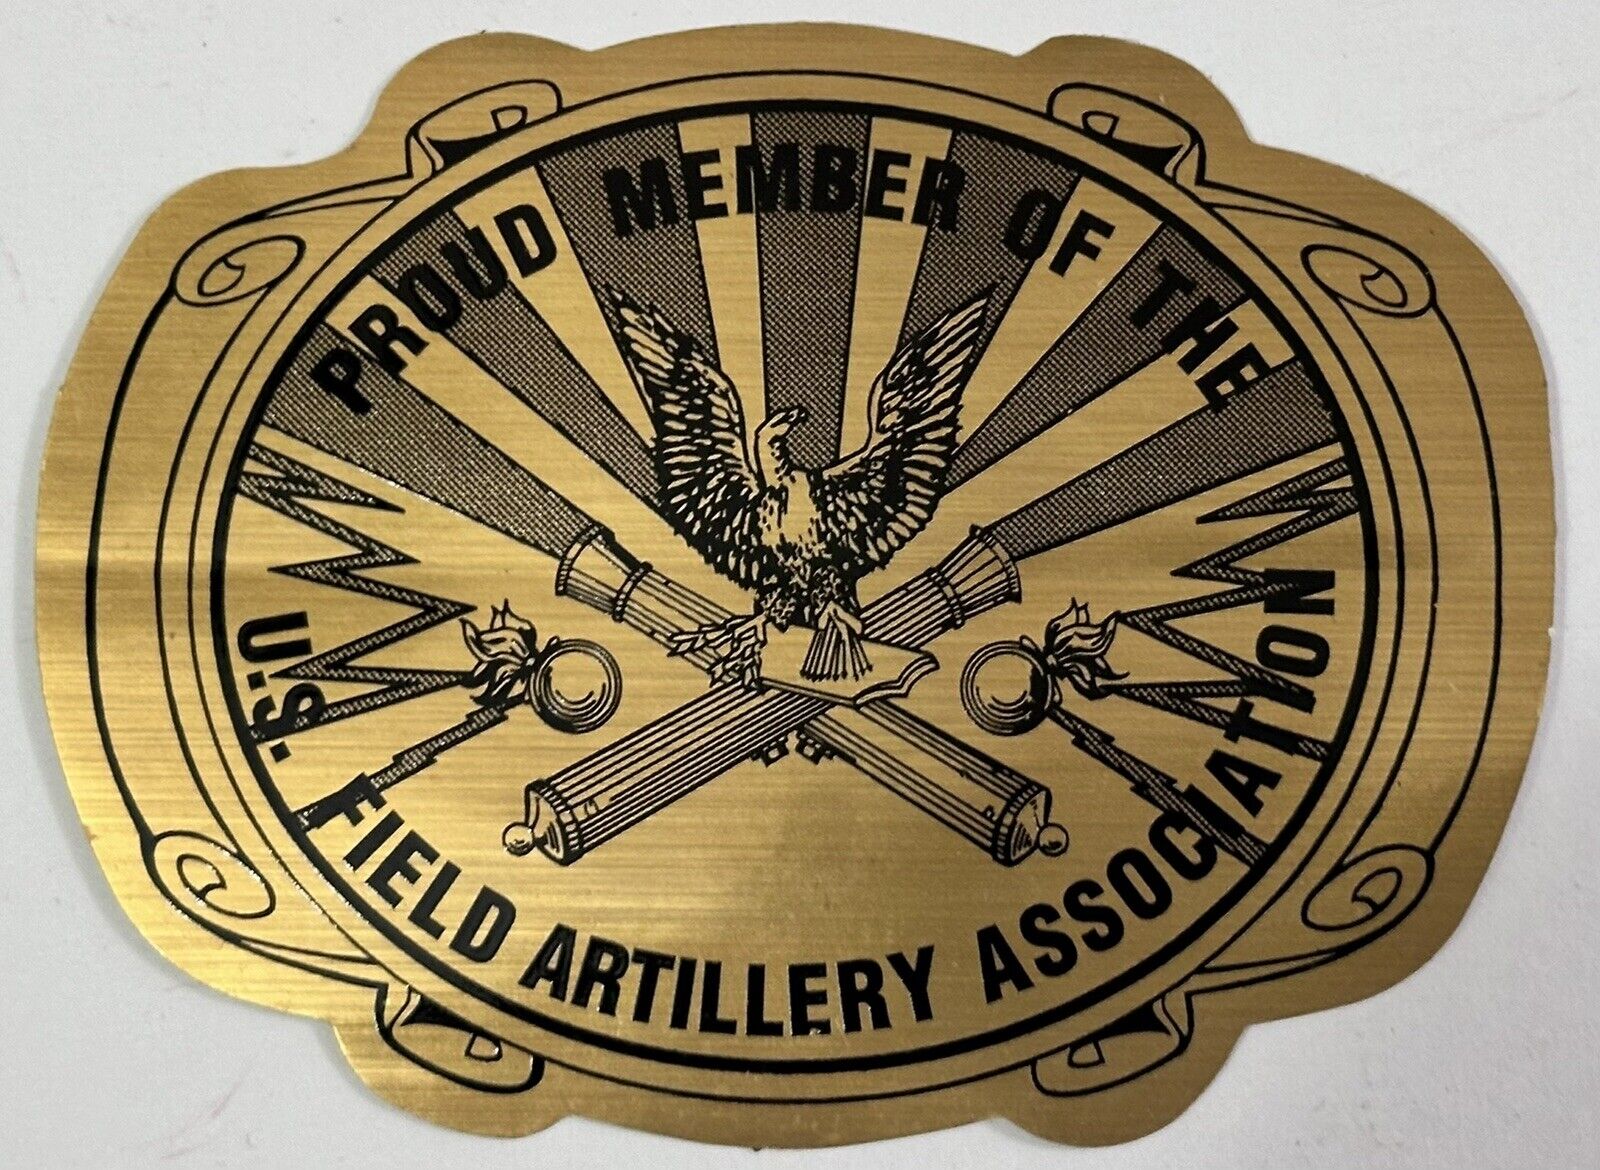 Proud Member Of The U.S. Field Artillery Association Gold Foil Sticker 4” x 3”